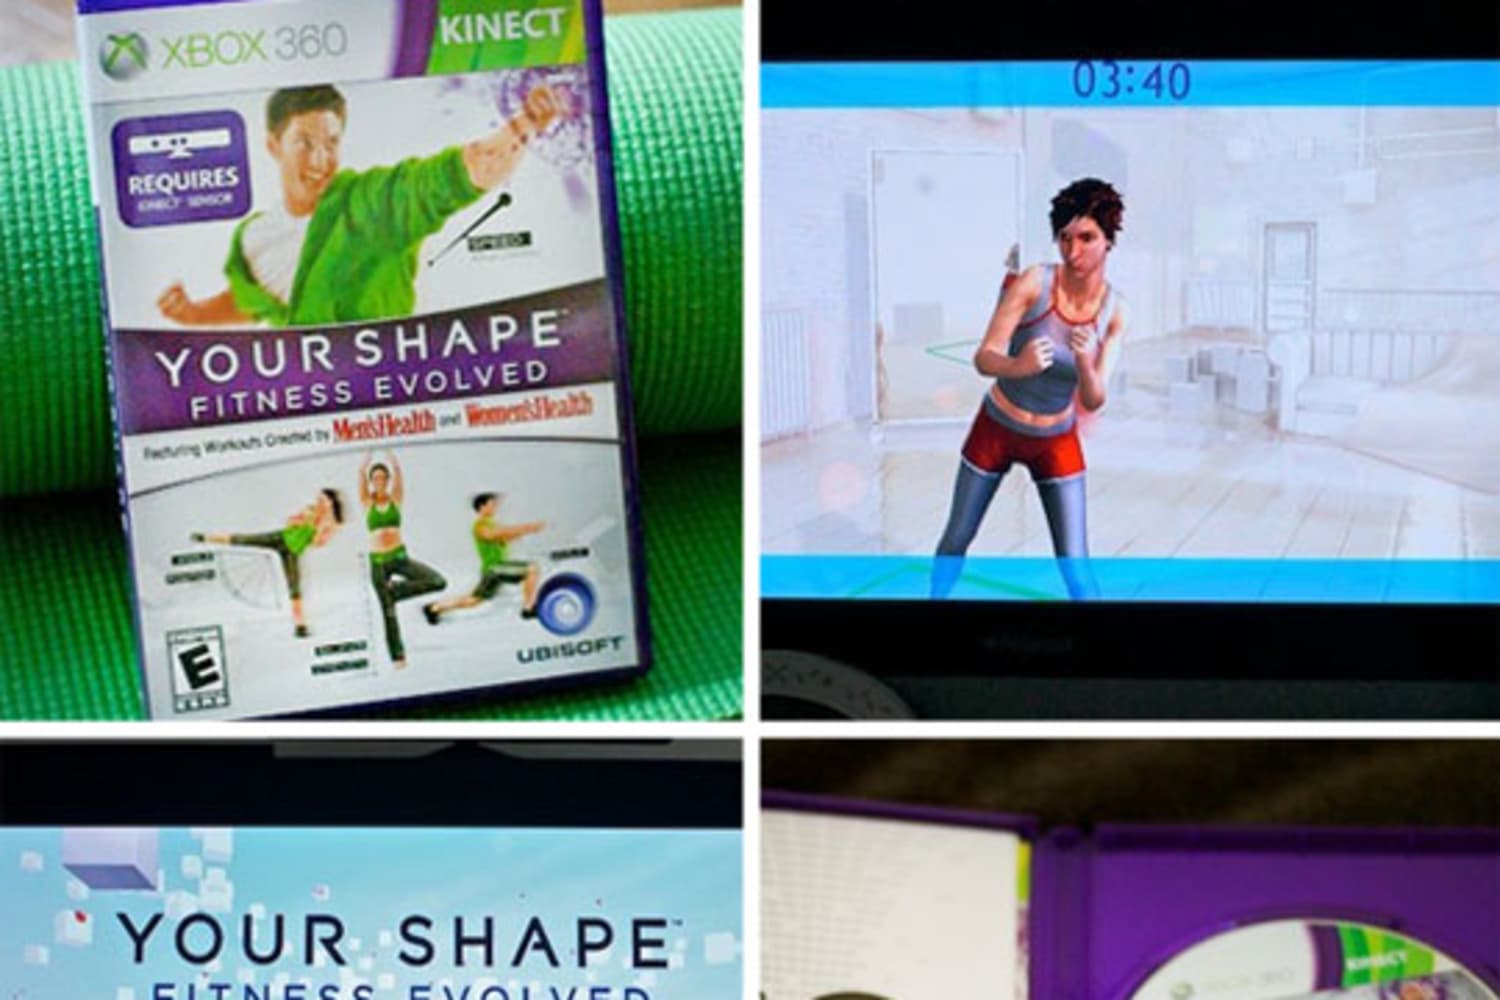 Your Shape Fitness Evolved 2012 para Xbox 360 - Kinect - Ubisoft